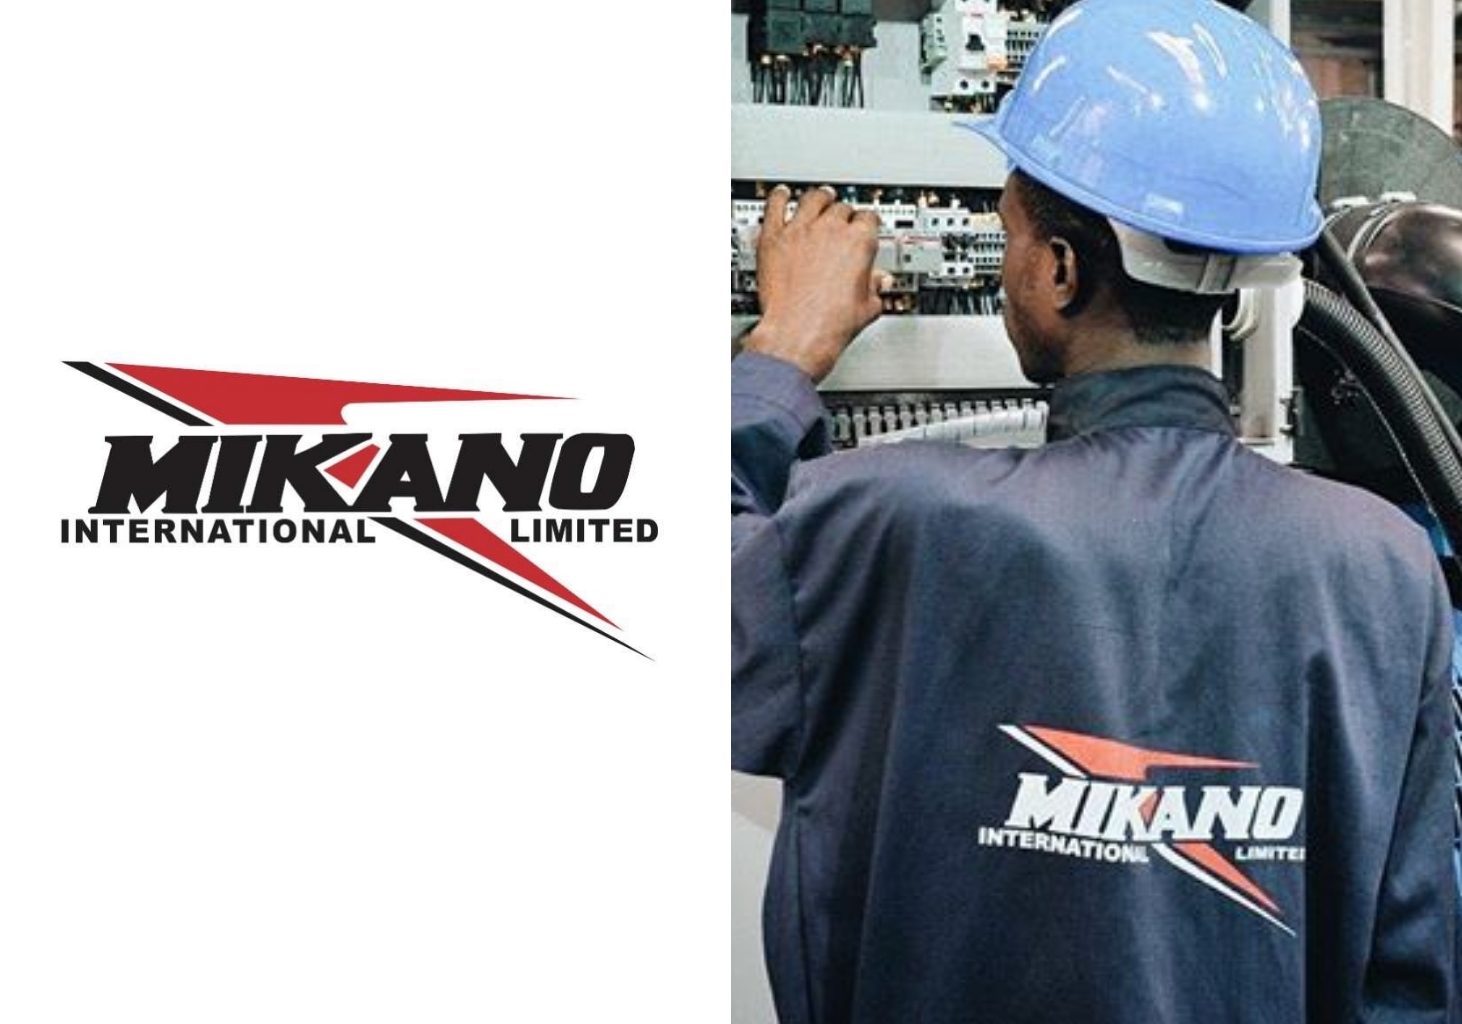 Generator manufacturers, Mikano sacks over 600 staff amid Coronavirus crisis